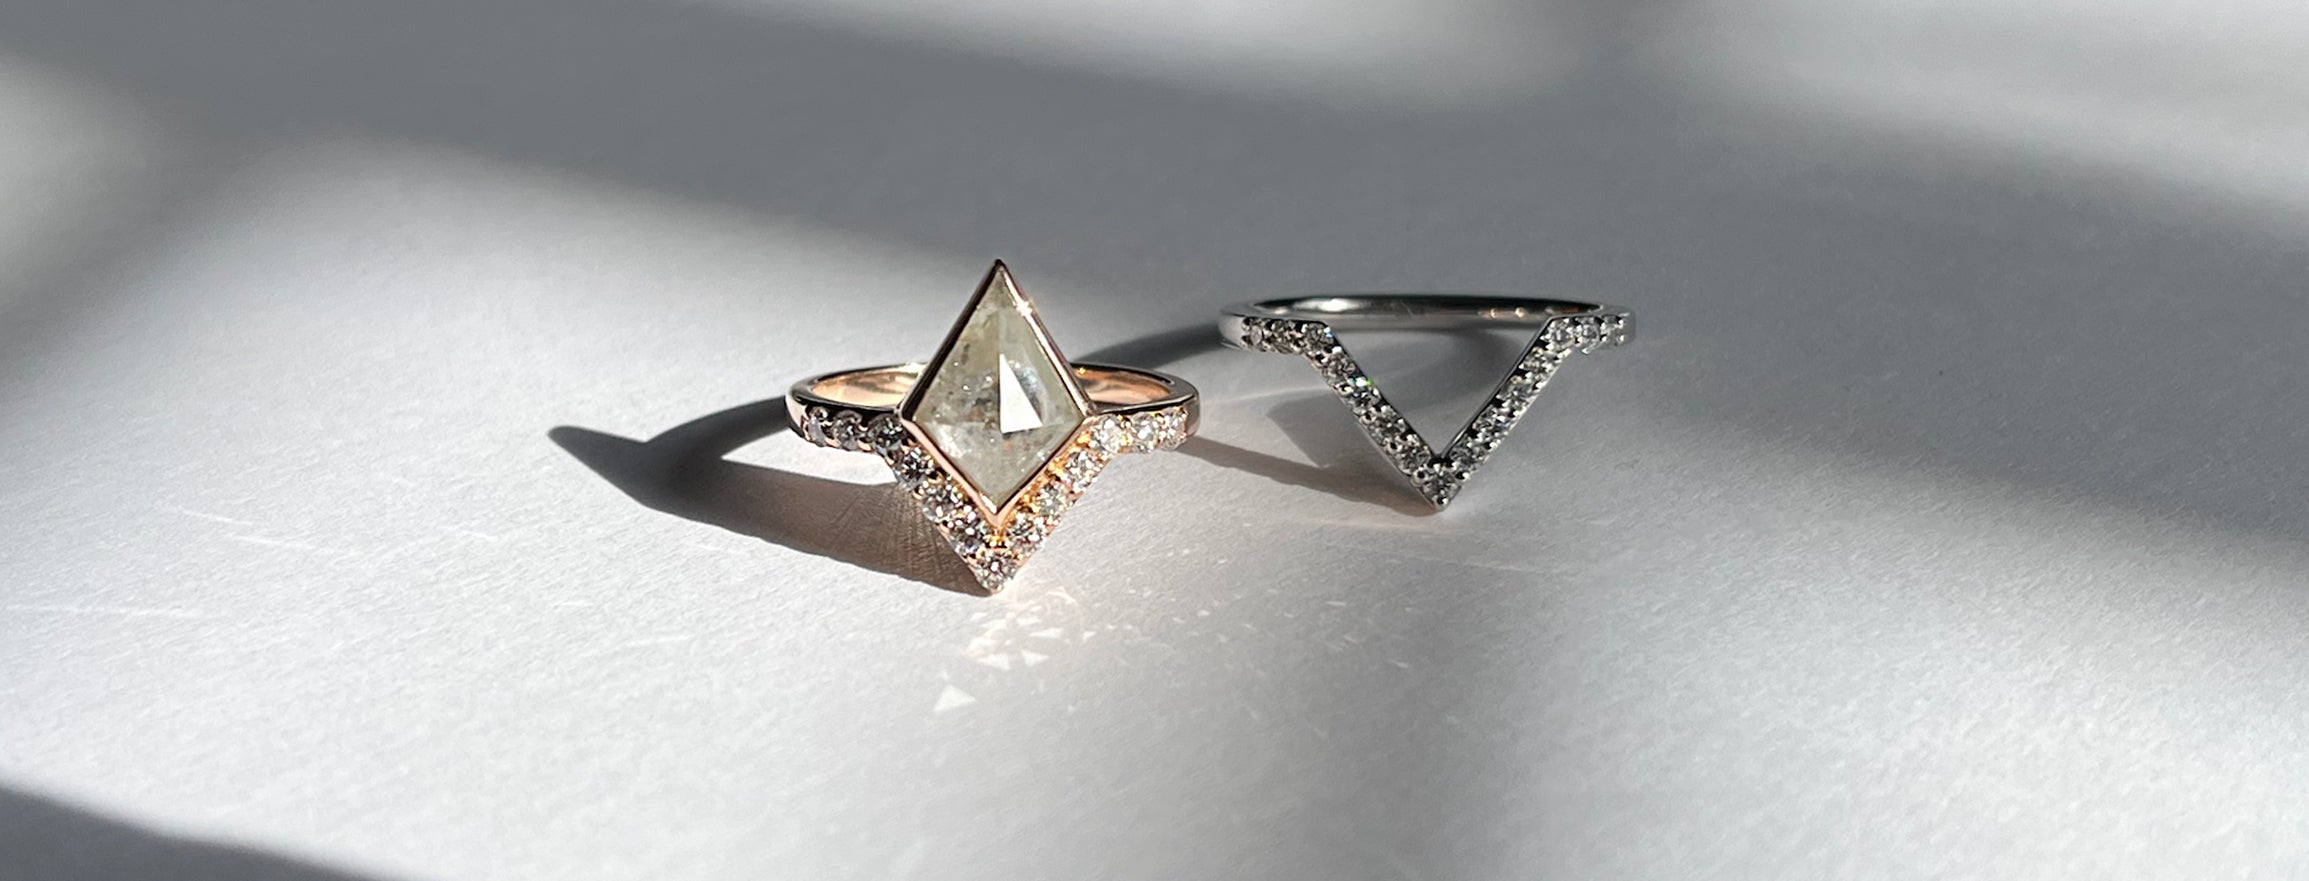 Mei-Li Rose bespoke jewellery wedding ring engagement ring set